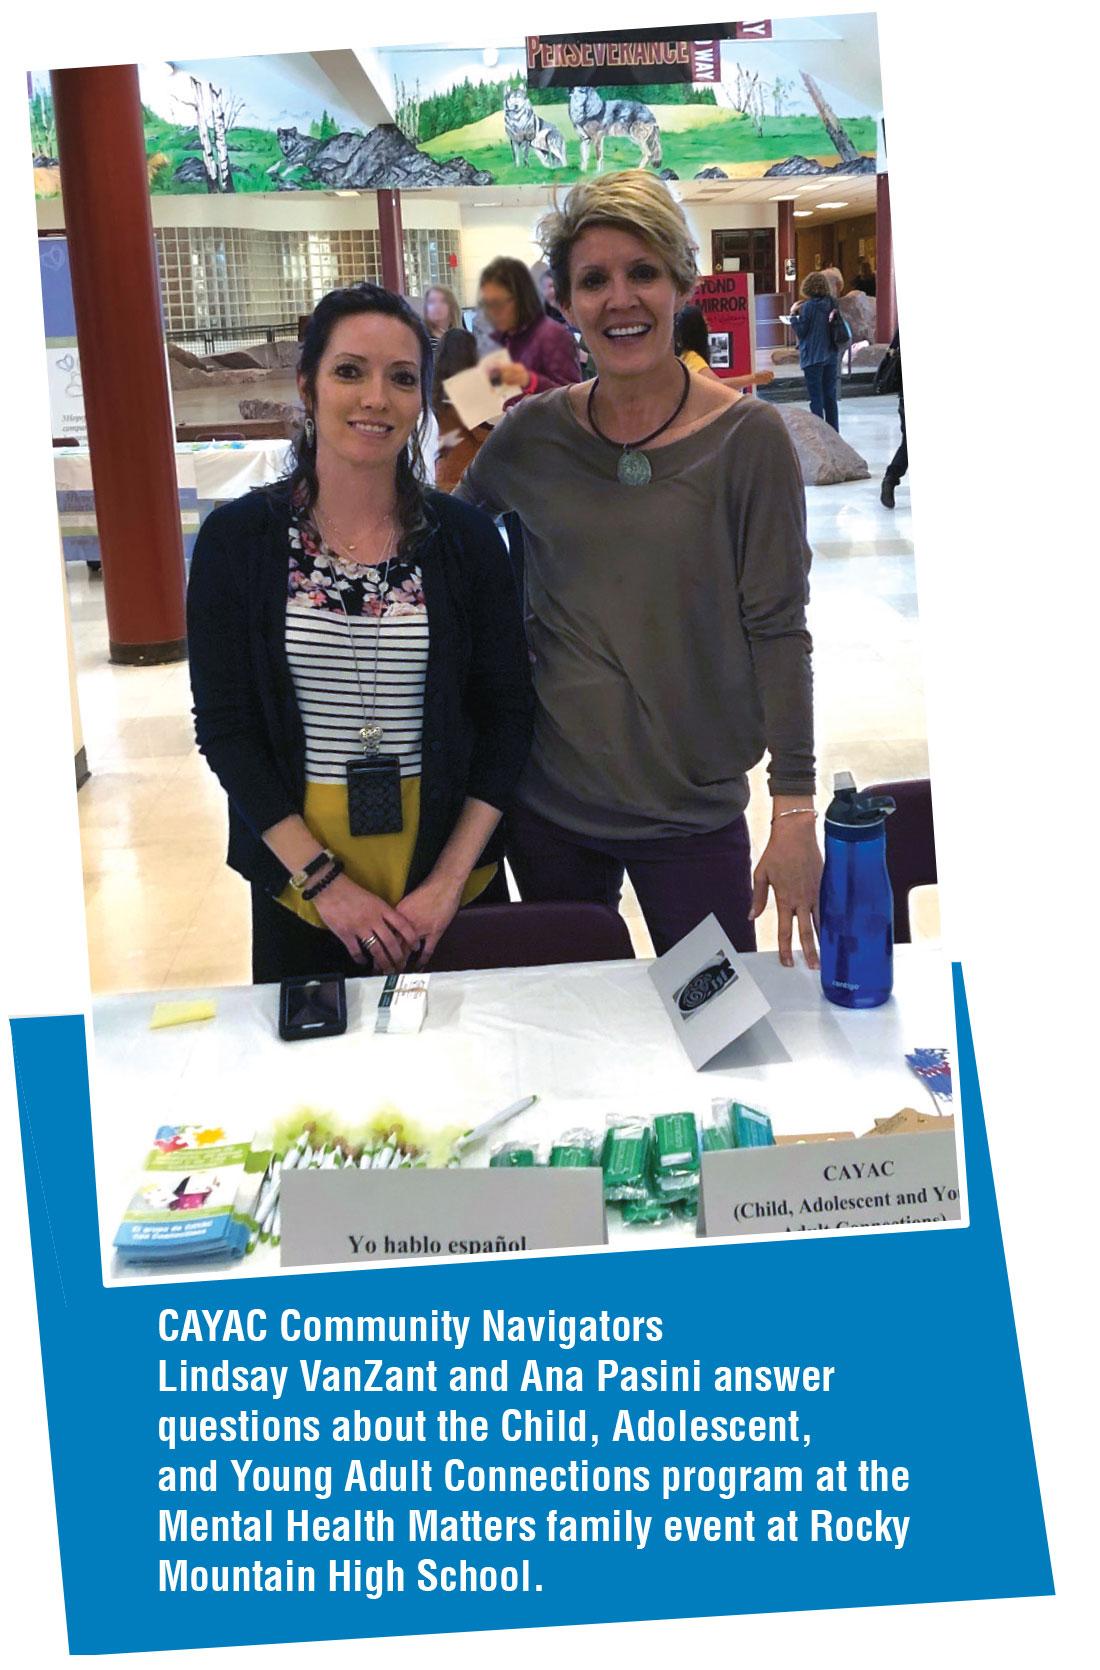 Lindsay VanZant and Ana Pasini, CAYAC community navigators